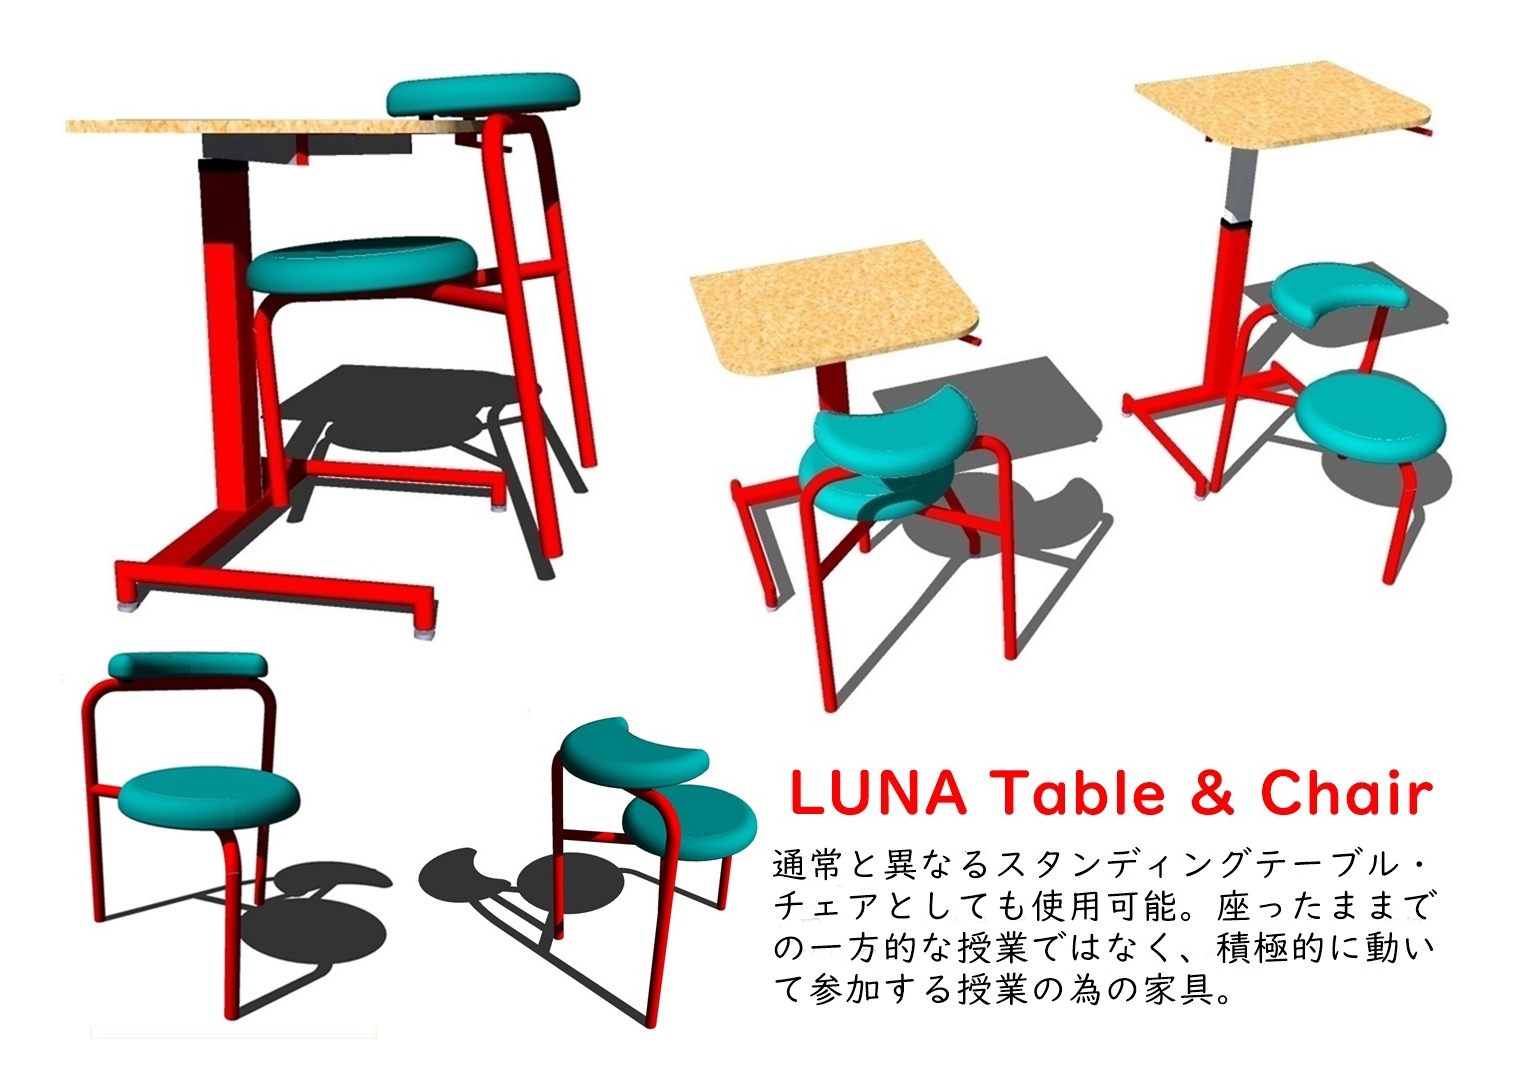 Luna Table & Chair